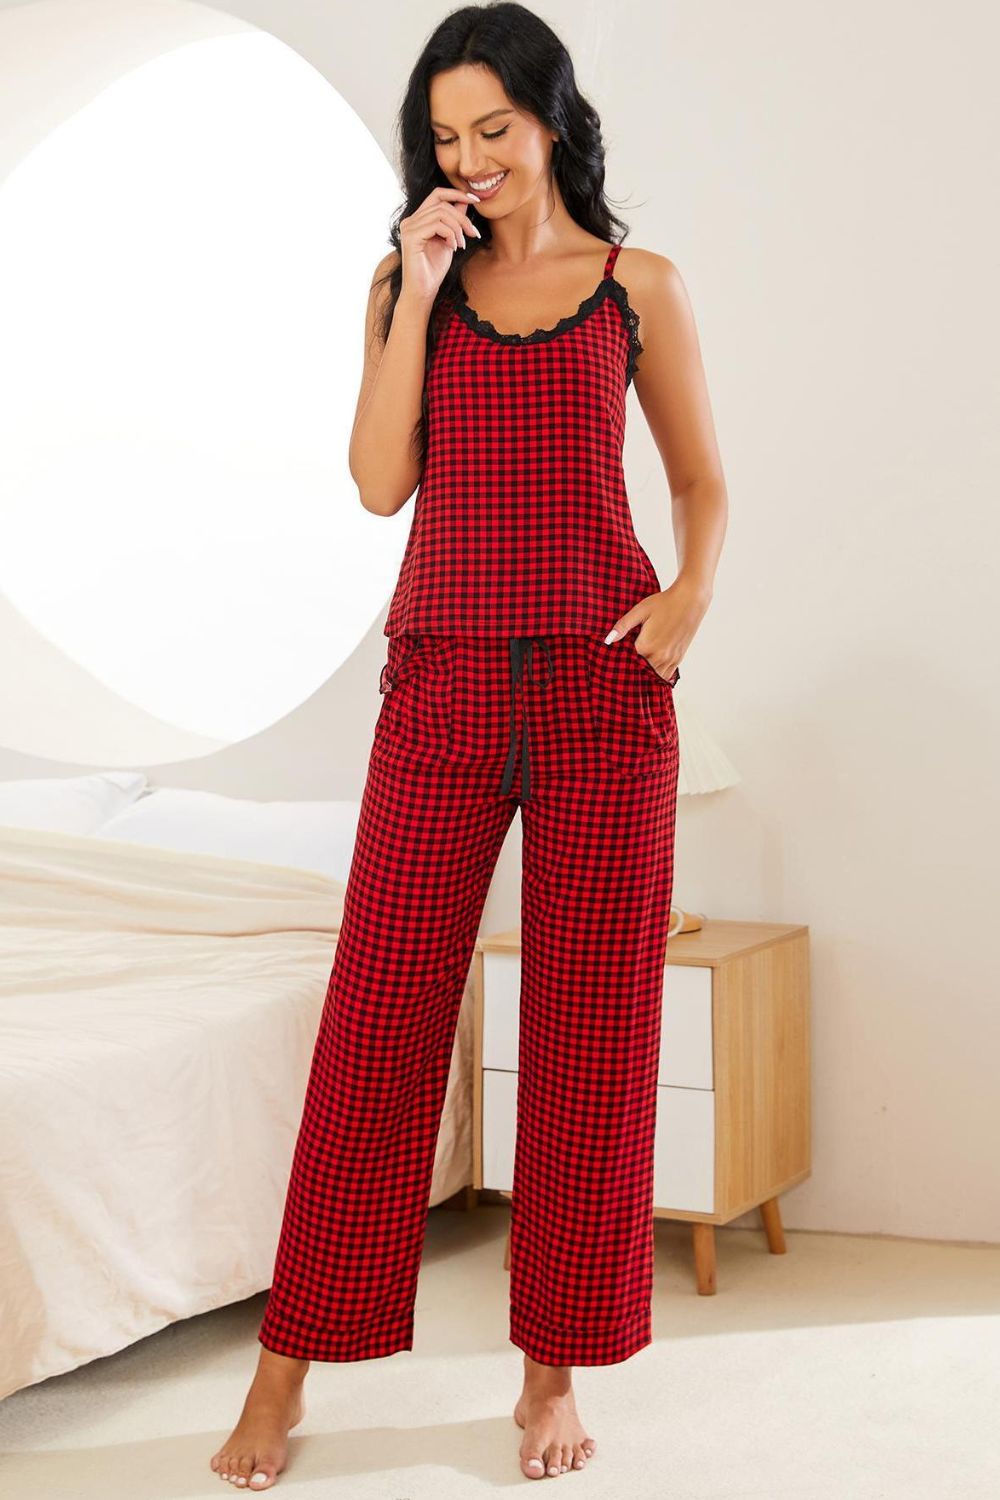 Women’s Plaid Lace Trim Cami and Drawstring Pants Pajama Set